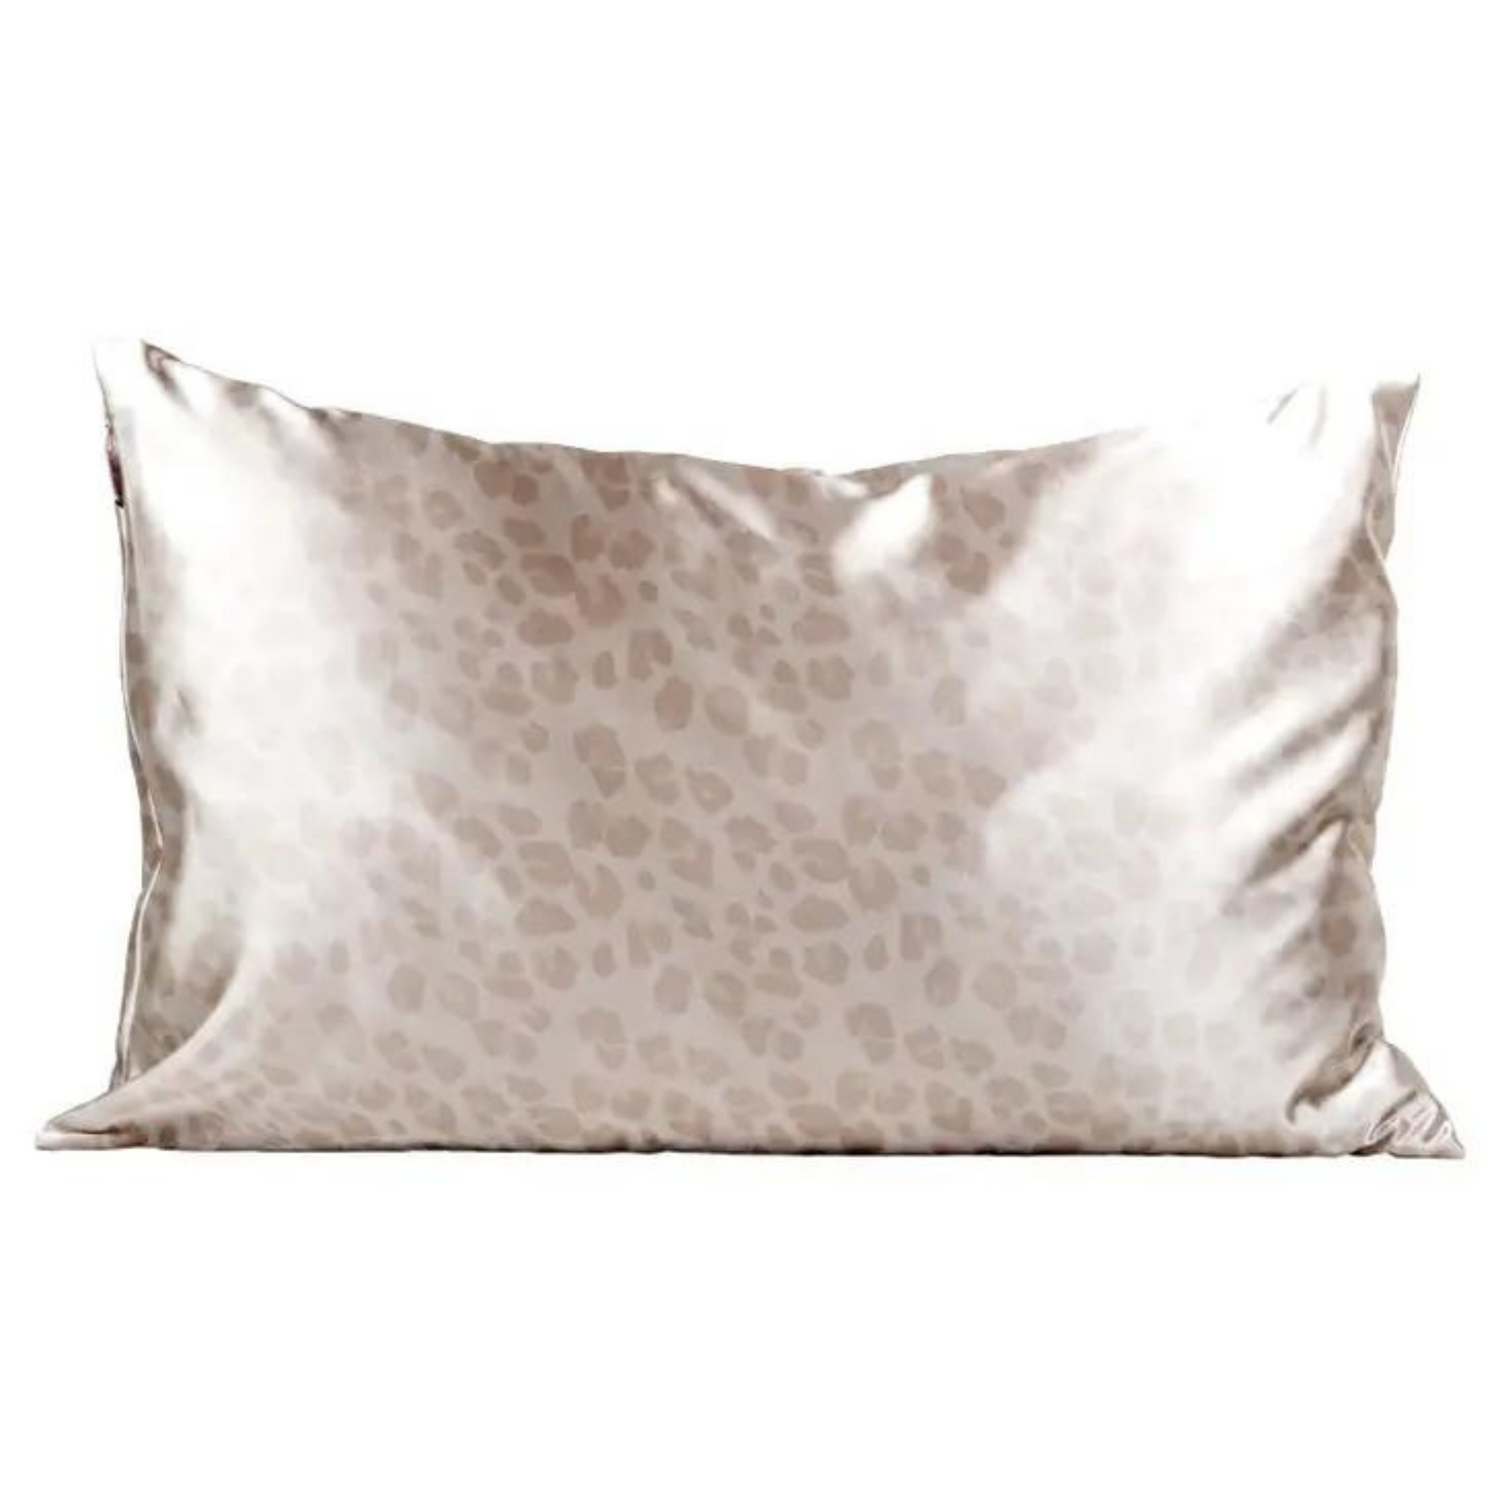 Kitsch Satin Pillowcase- Standard Size